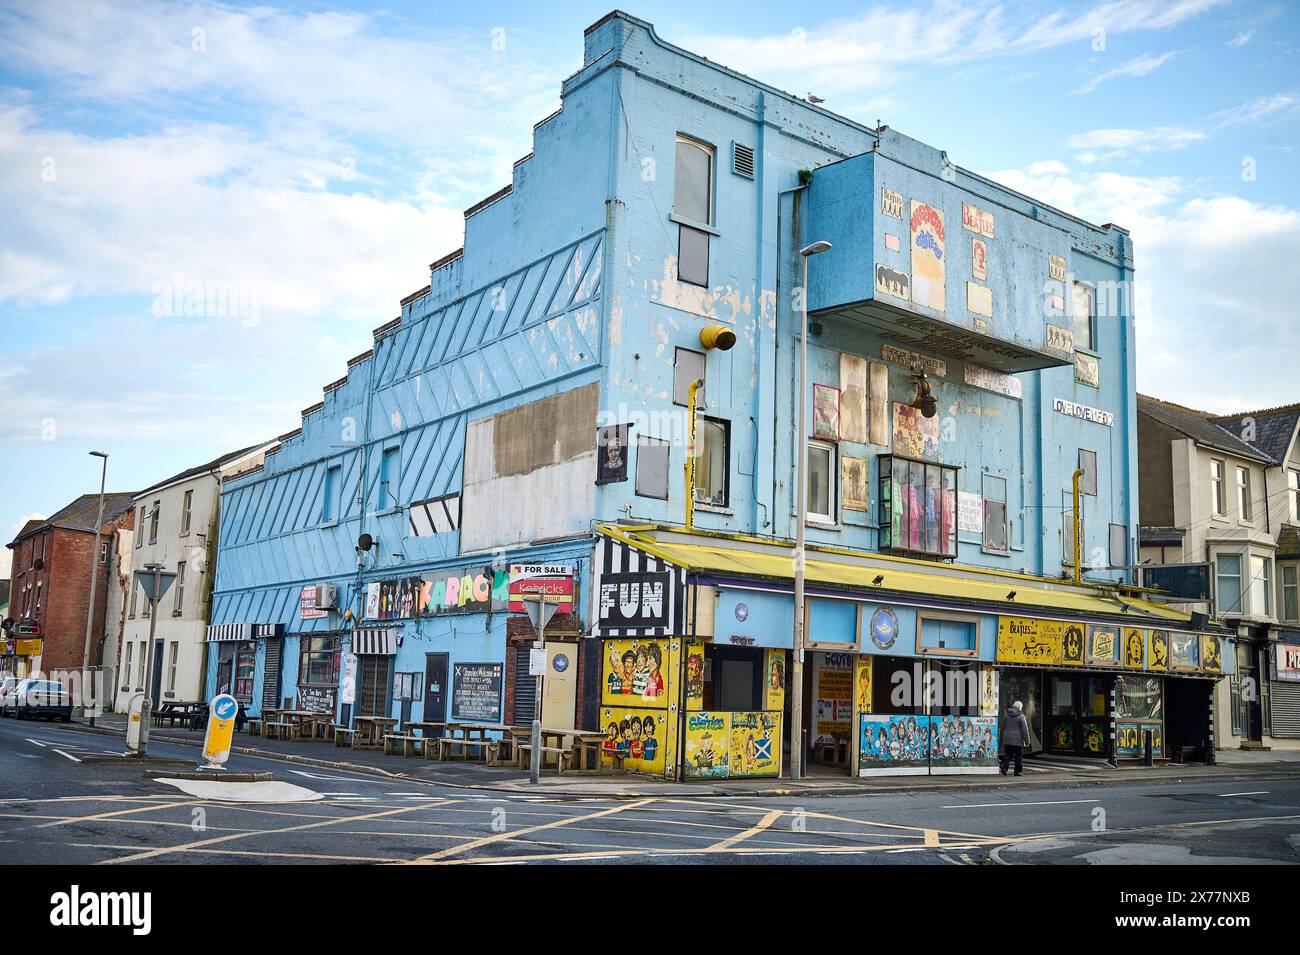 Ancien cinéma converti en bars, Blackpool, Royaume-Uni Banque D'Images